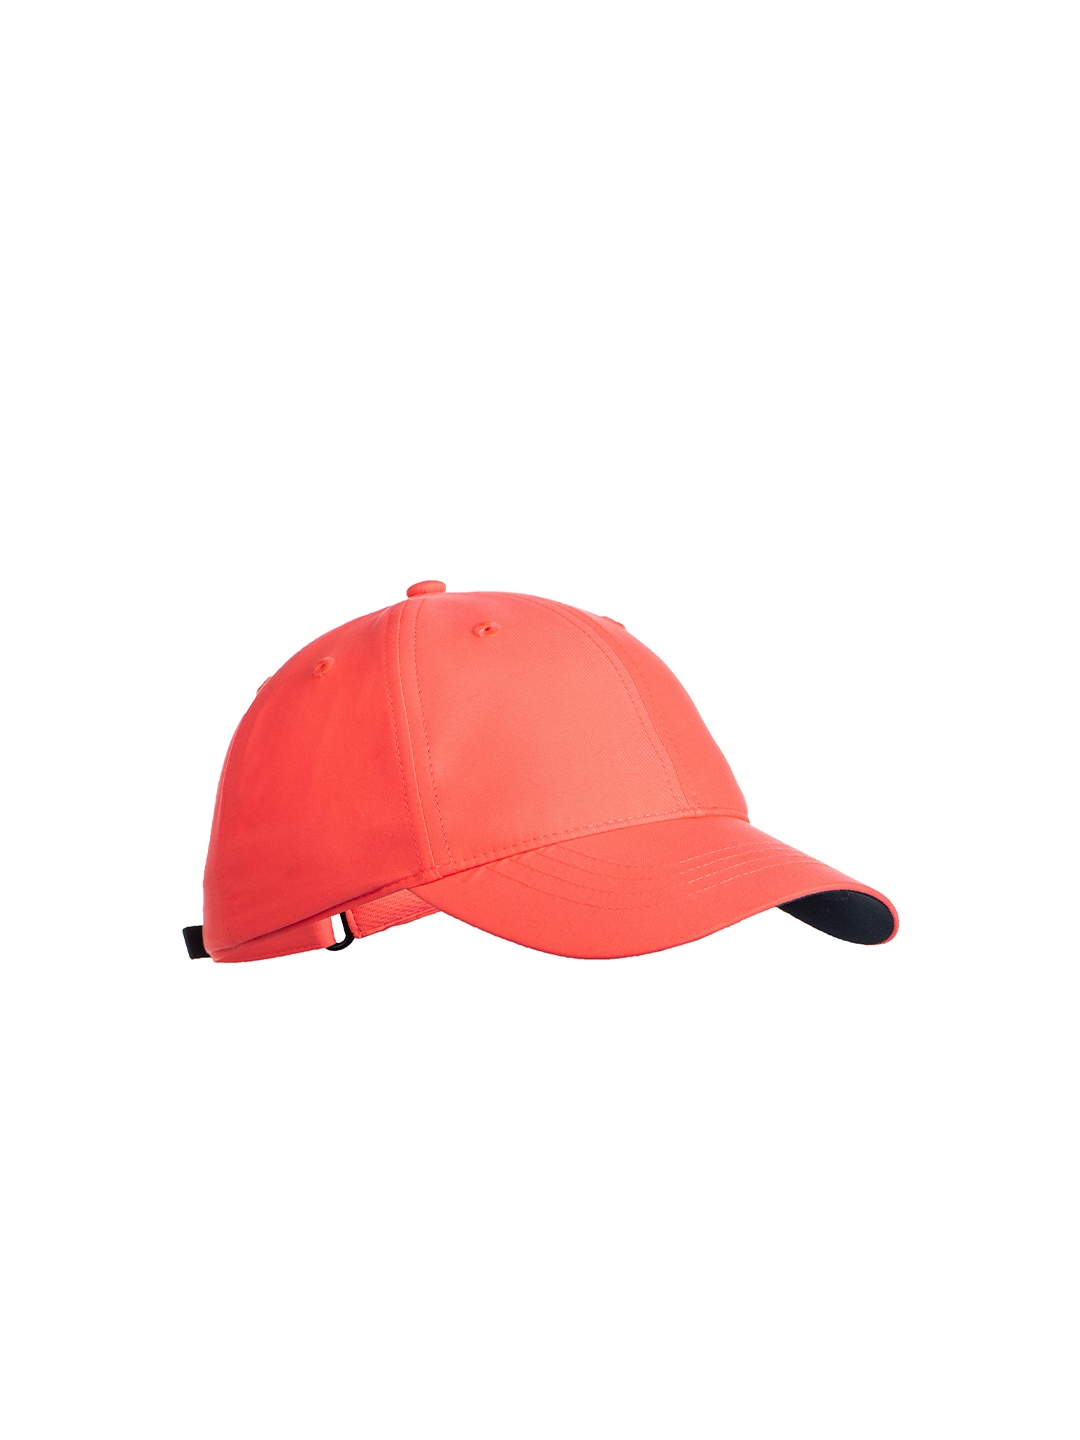 Artengo By Decathlon Unisex Orange & Black Baseball Cap Price in India